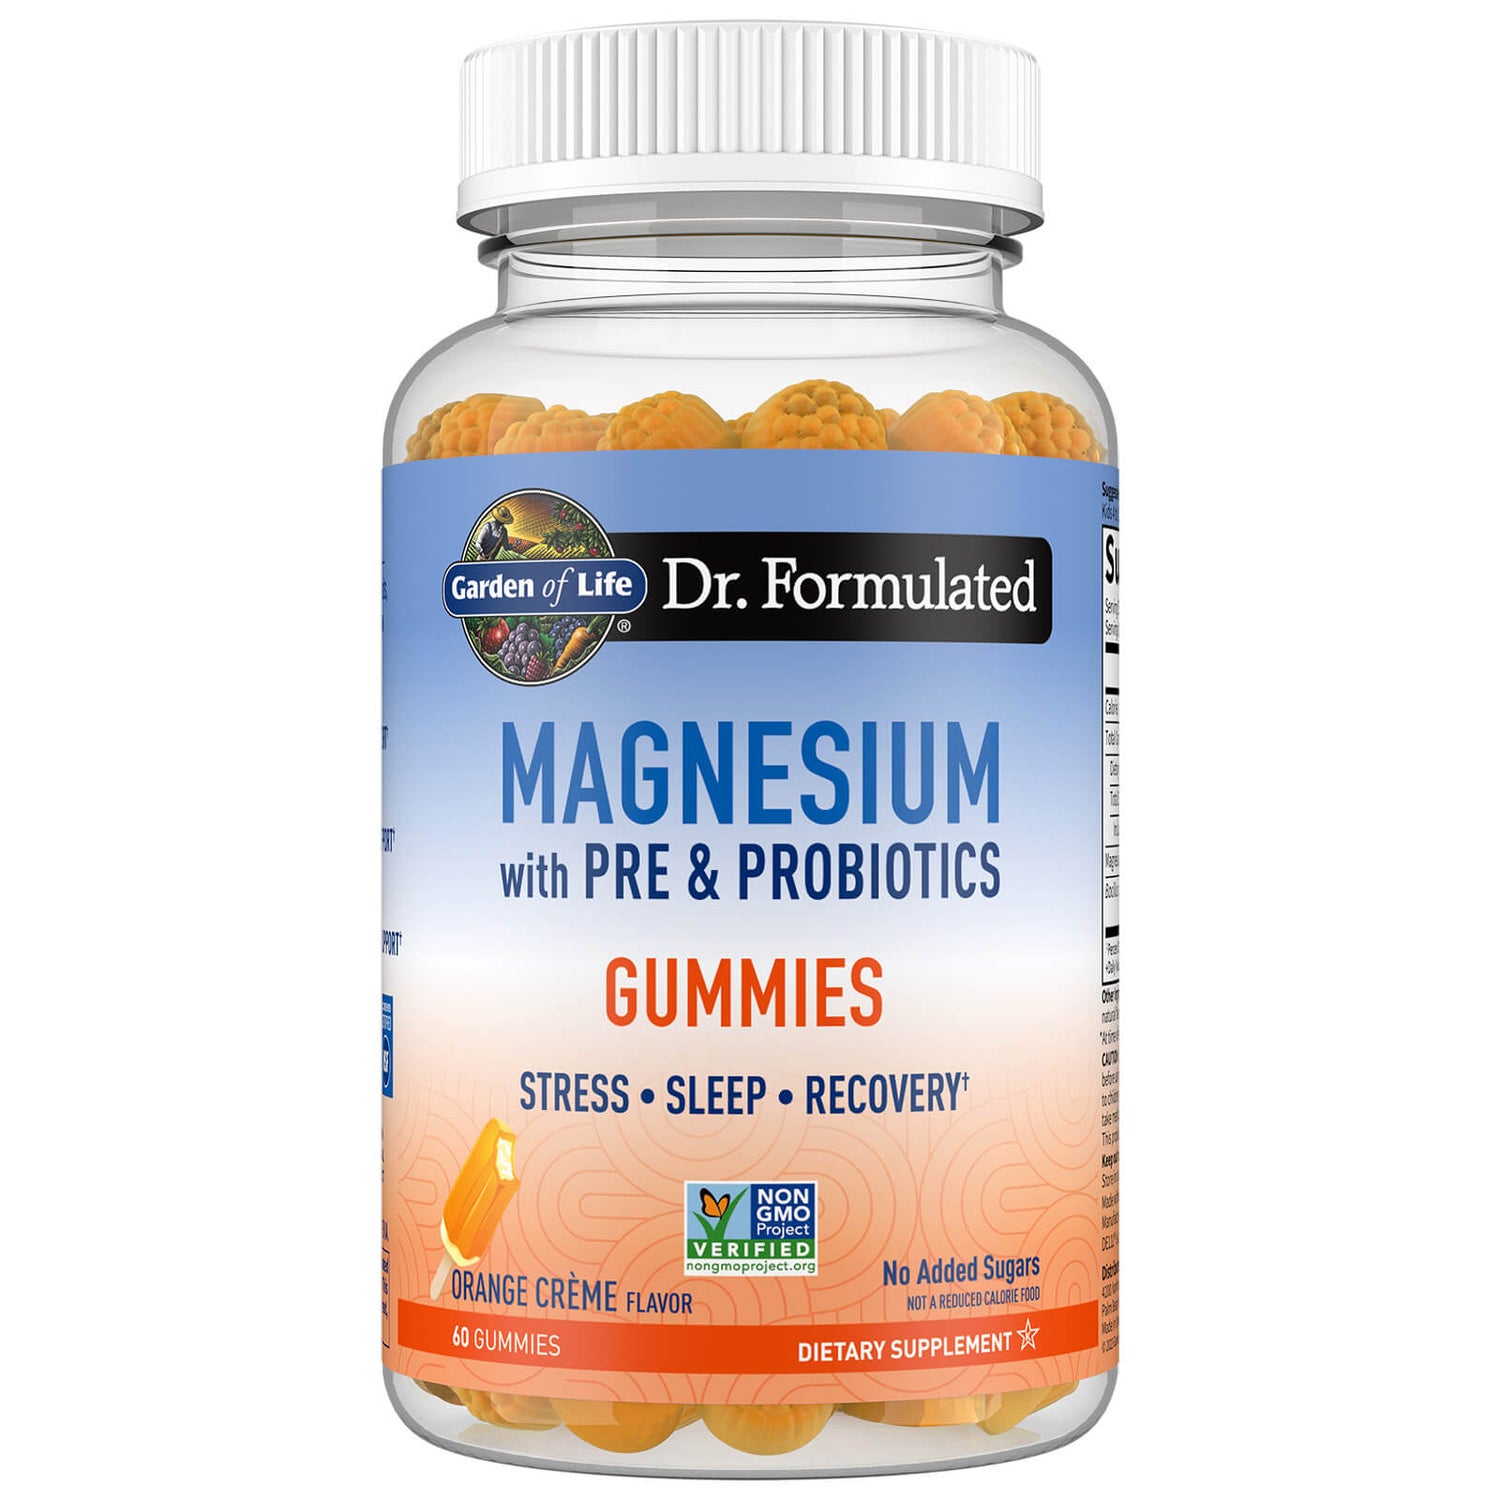 Dr. Formulated Caramelle Gommose a Base di Magnesio - Crema all'arancia - 60 caramelle gommose